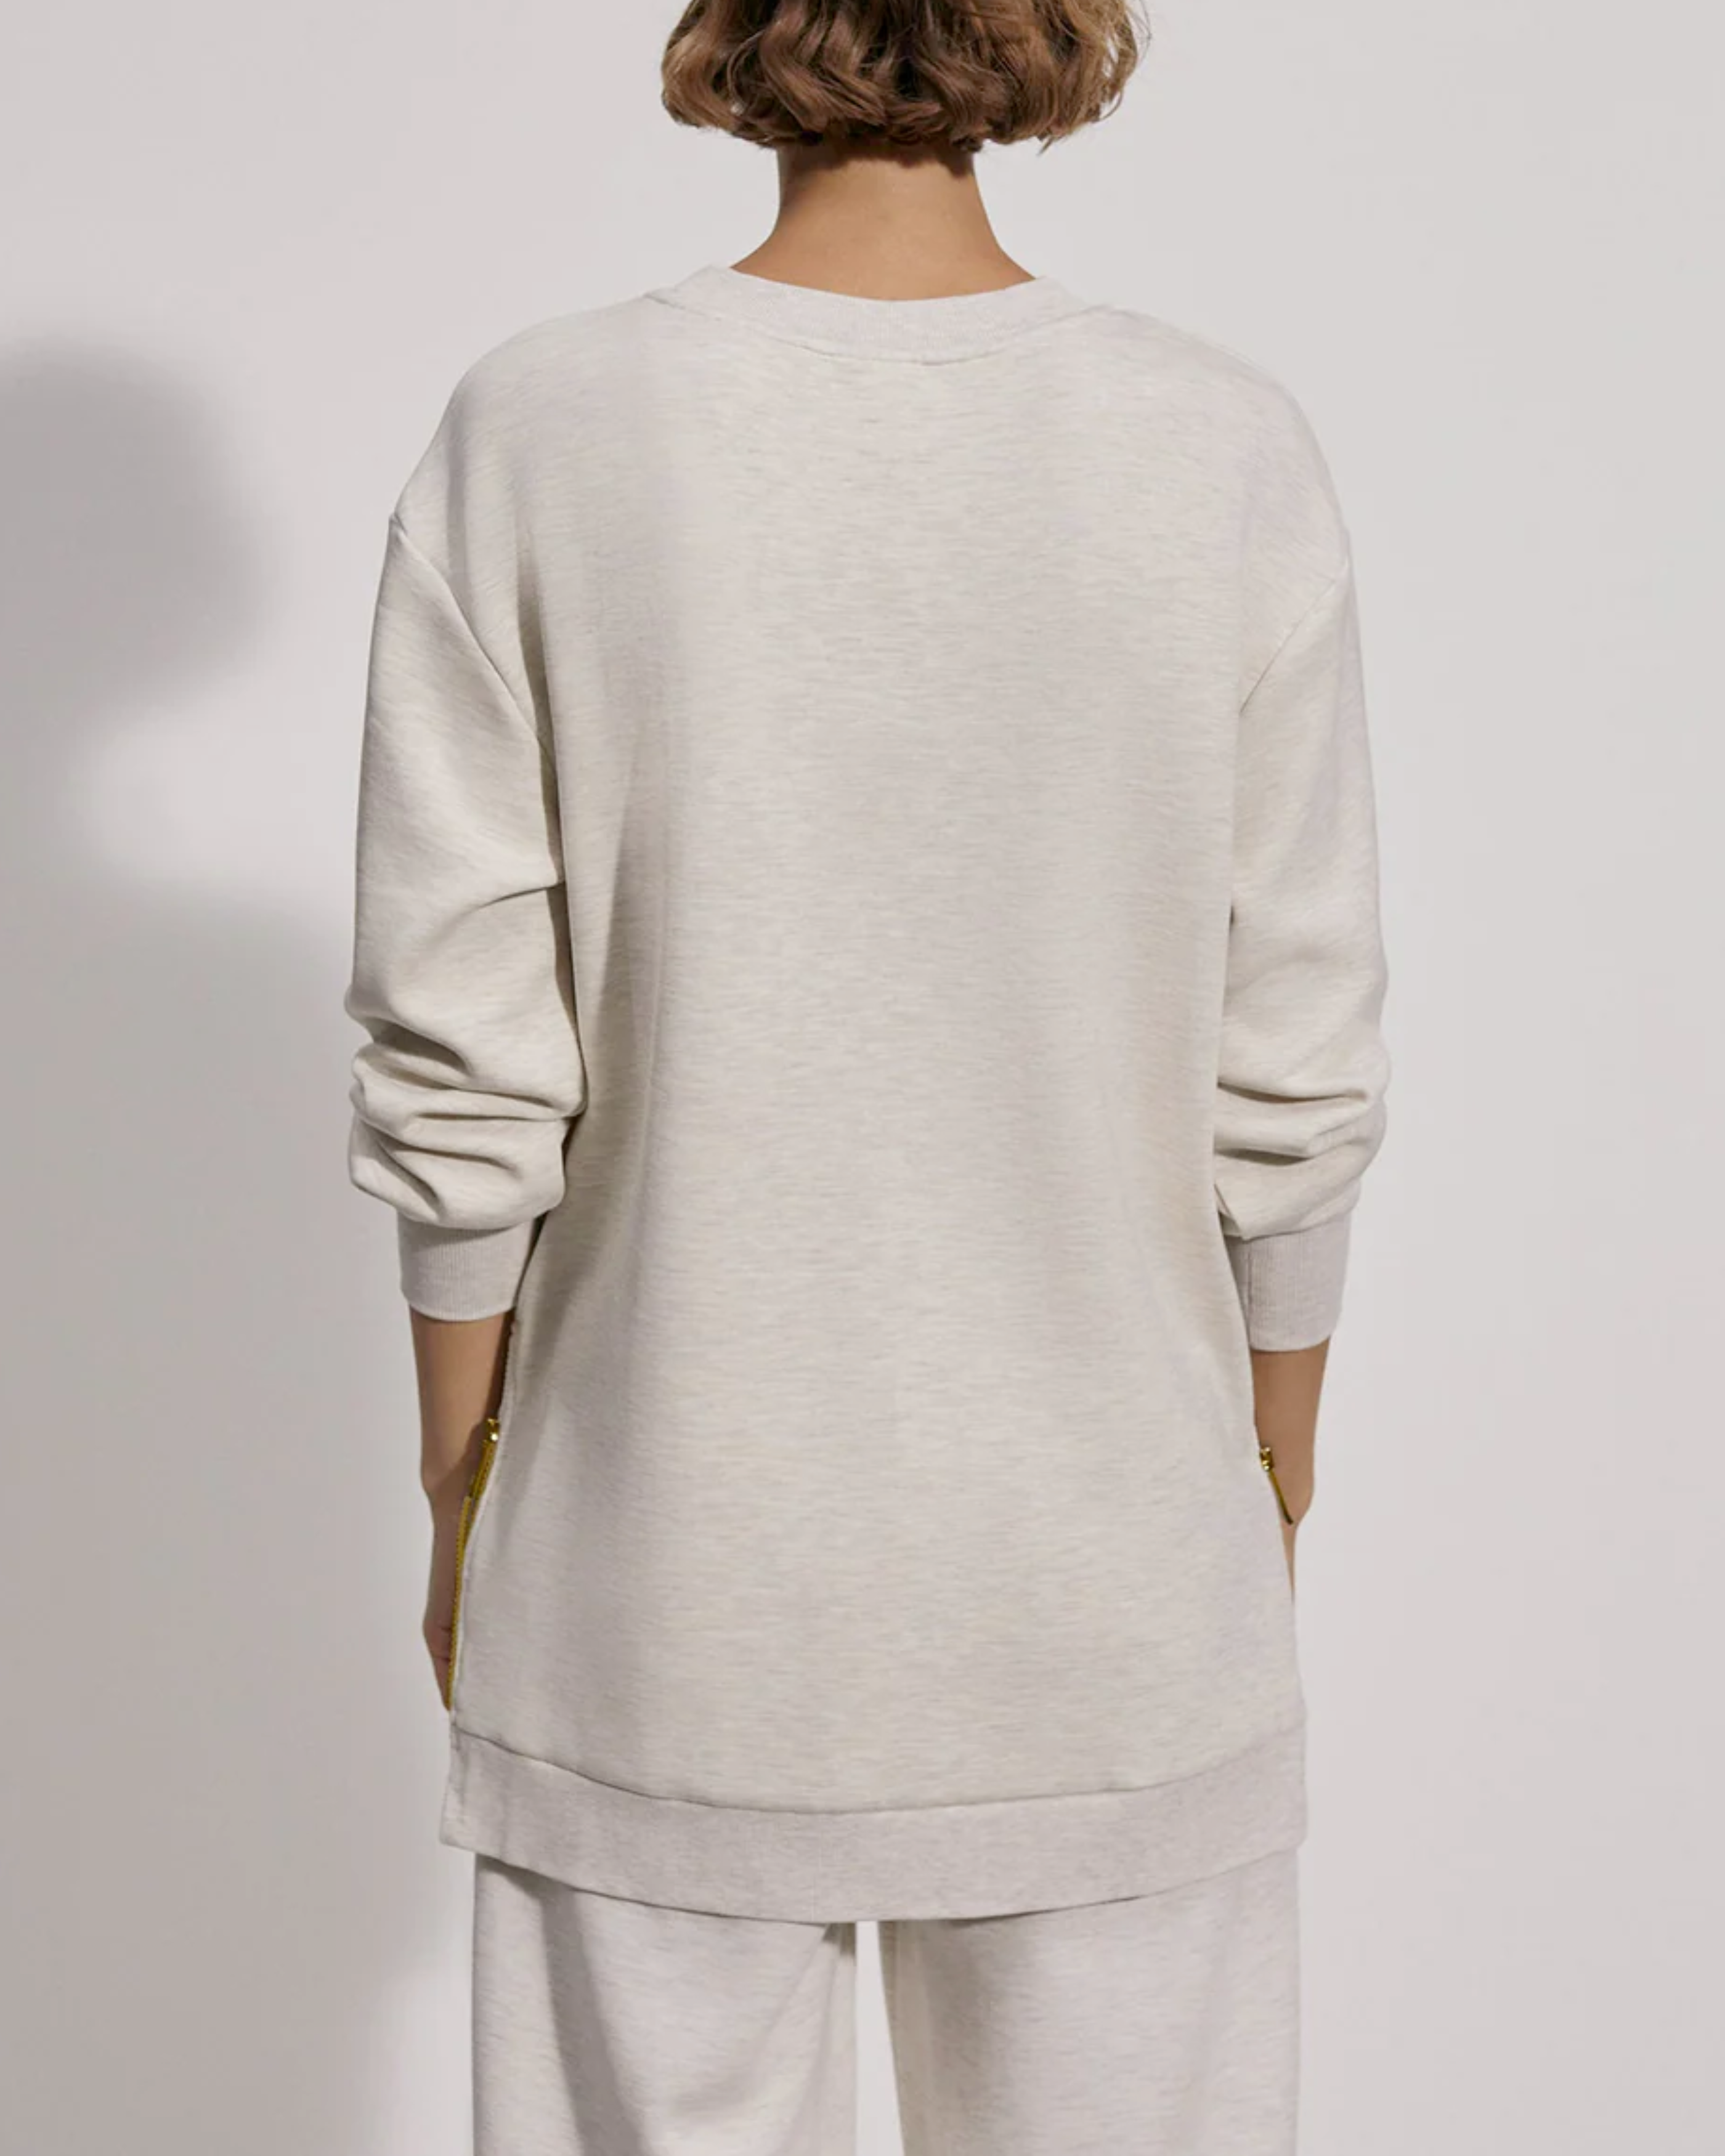 Varley Charter Sweatshirt in Ivory Marl